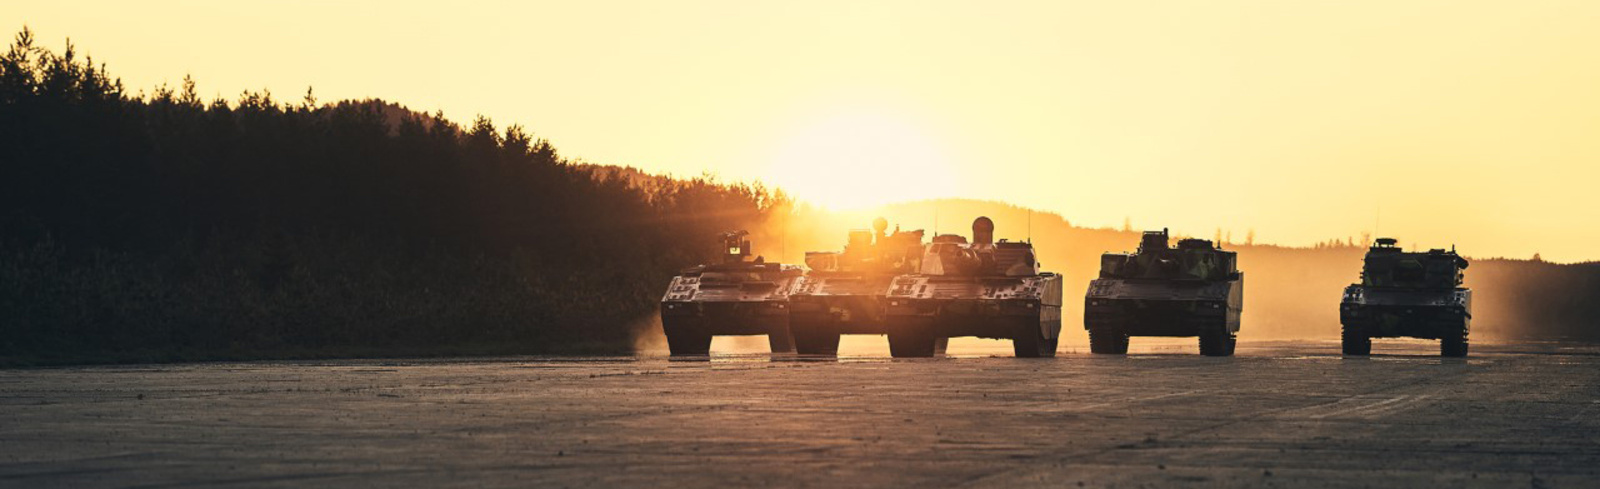 CV90 variants lined up at sunset